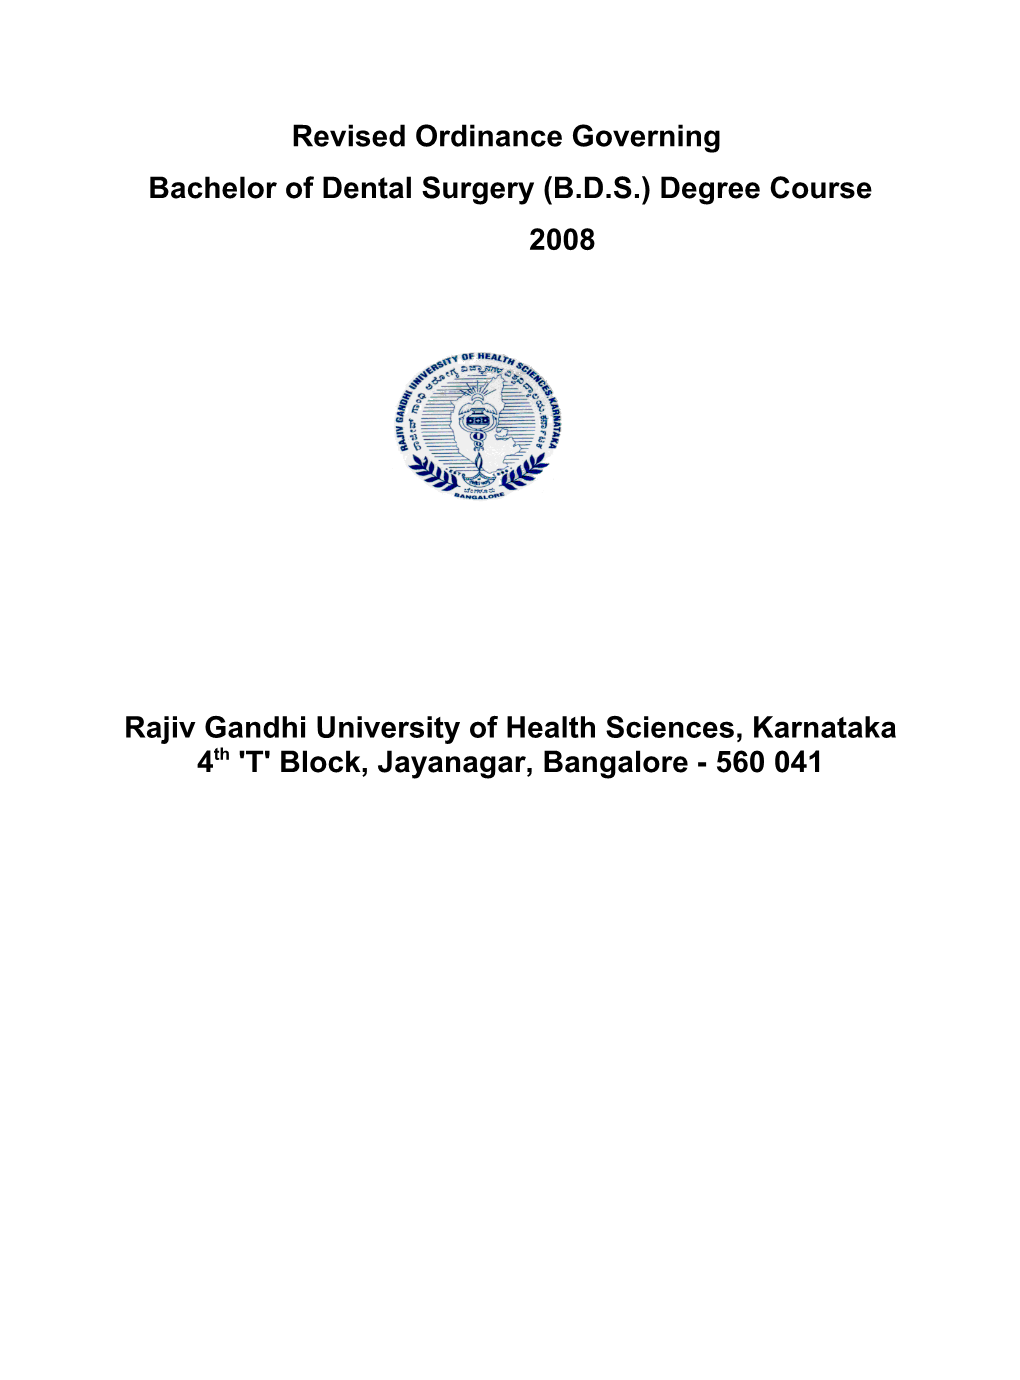 Bachelor of Dental Surgery (B.D.S.) Degree Course 2008